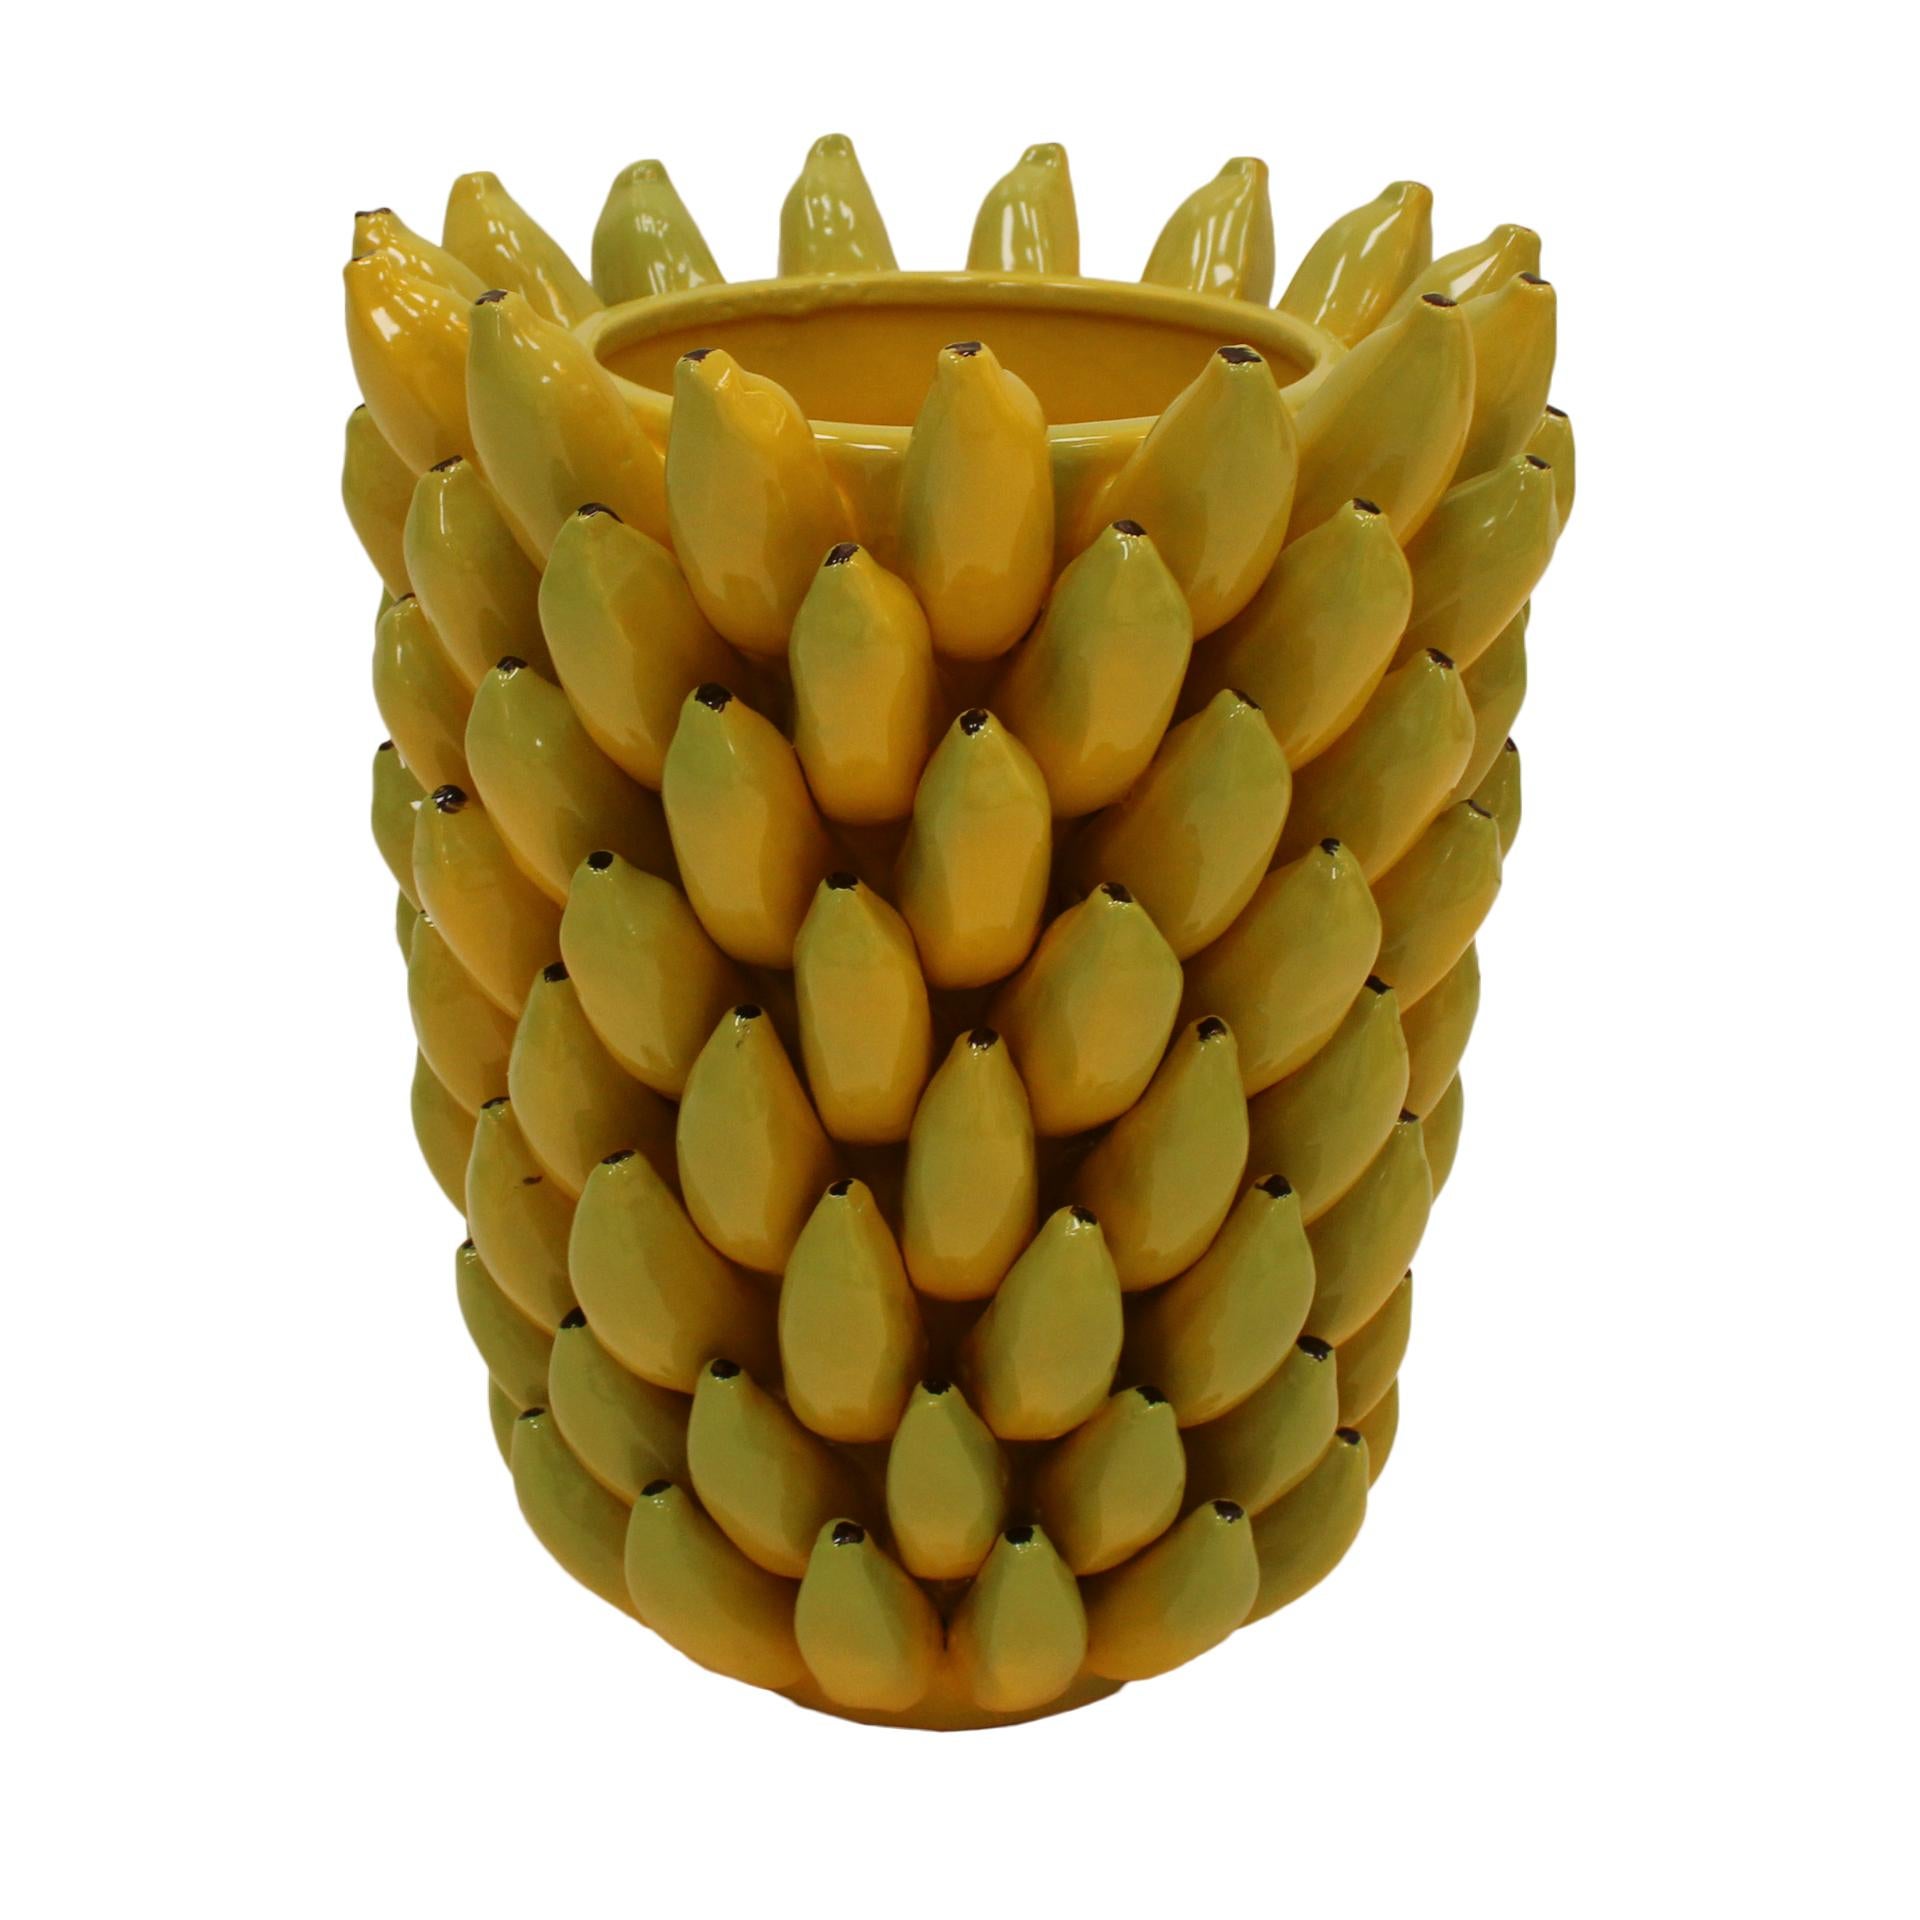 Turned Italian Yellow Ceramic Vase with Fruit Motifs